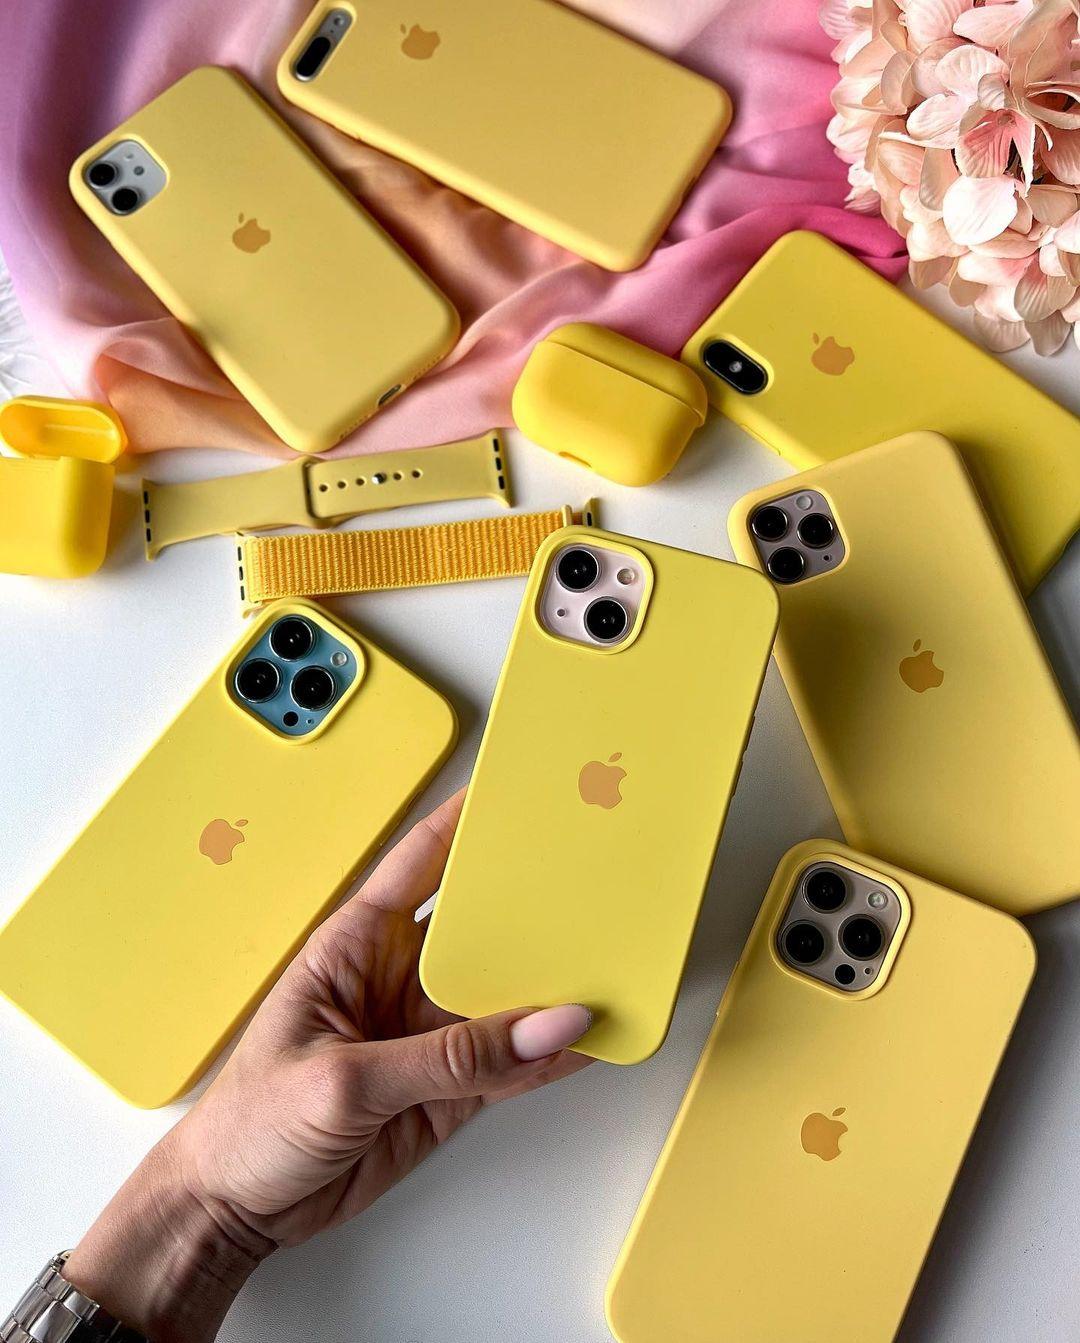 Husa Silicon Interior Microfibra Yellow Apple iPhone 11 Pro Max - StarMobile.ro - Modă pentru telefon